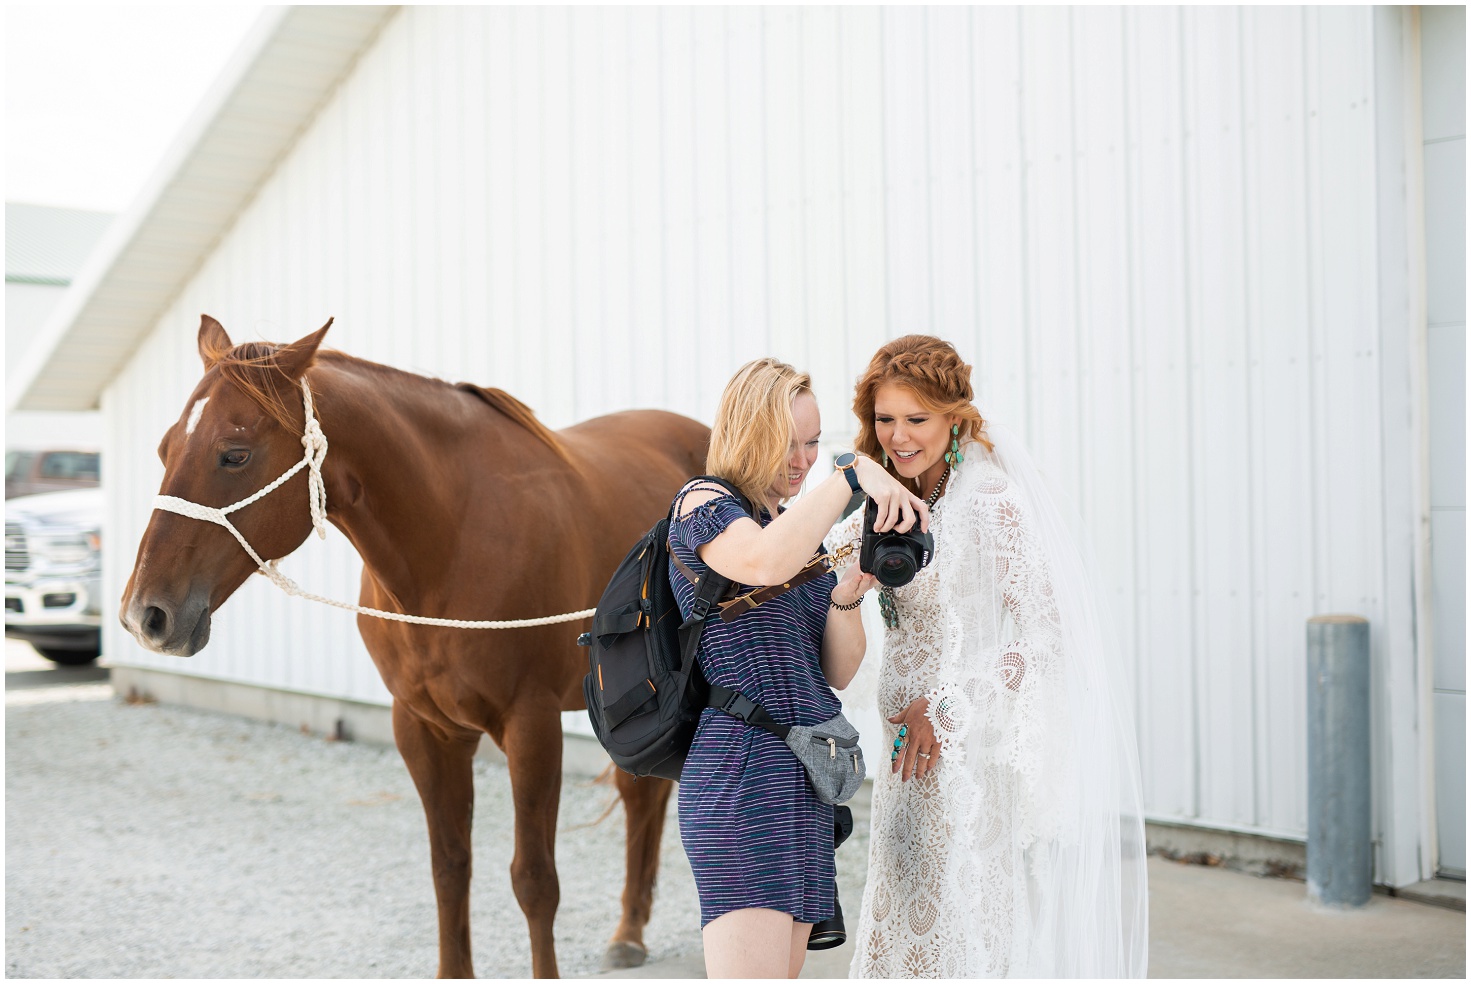 Des Moines Photographer - Annaberry Images - Iowa Wedding Ideas